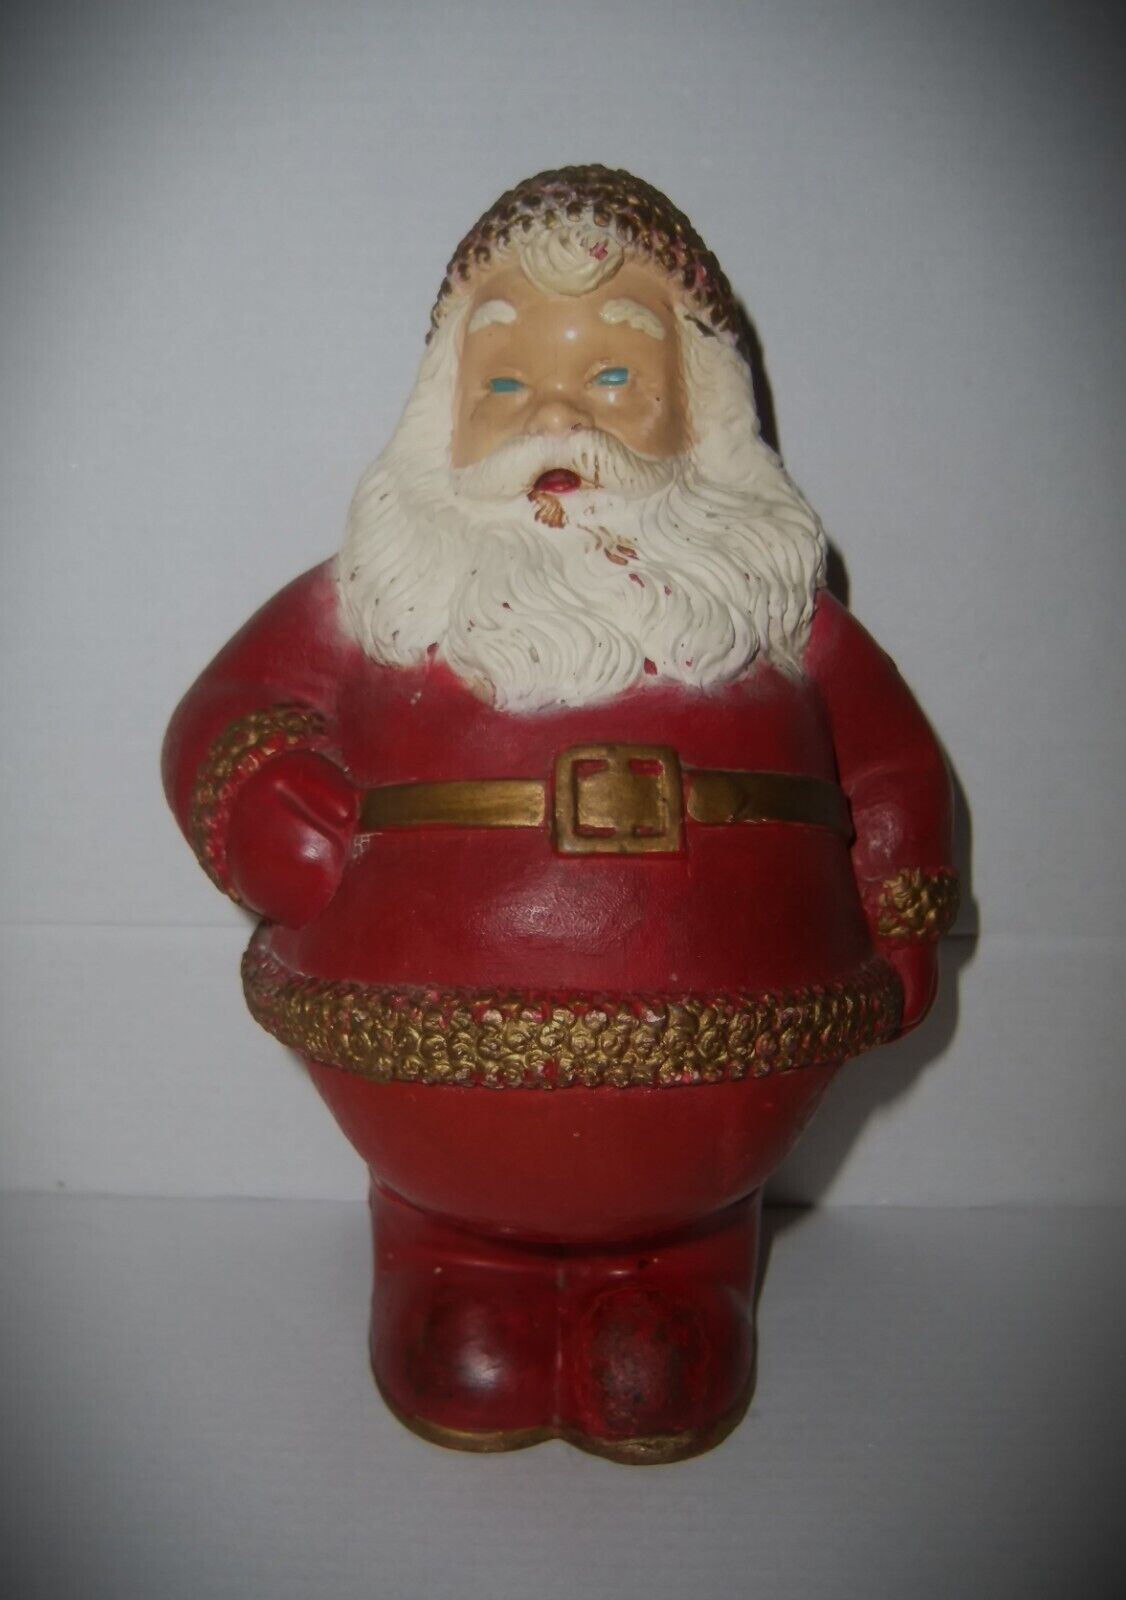 SANTA CLAUS Chalkware Figure Old Vintage Antique Christmas St Nick Holiday Decor